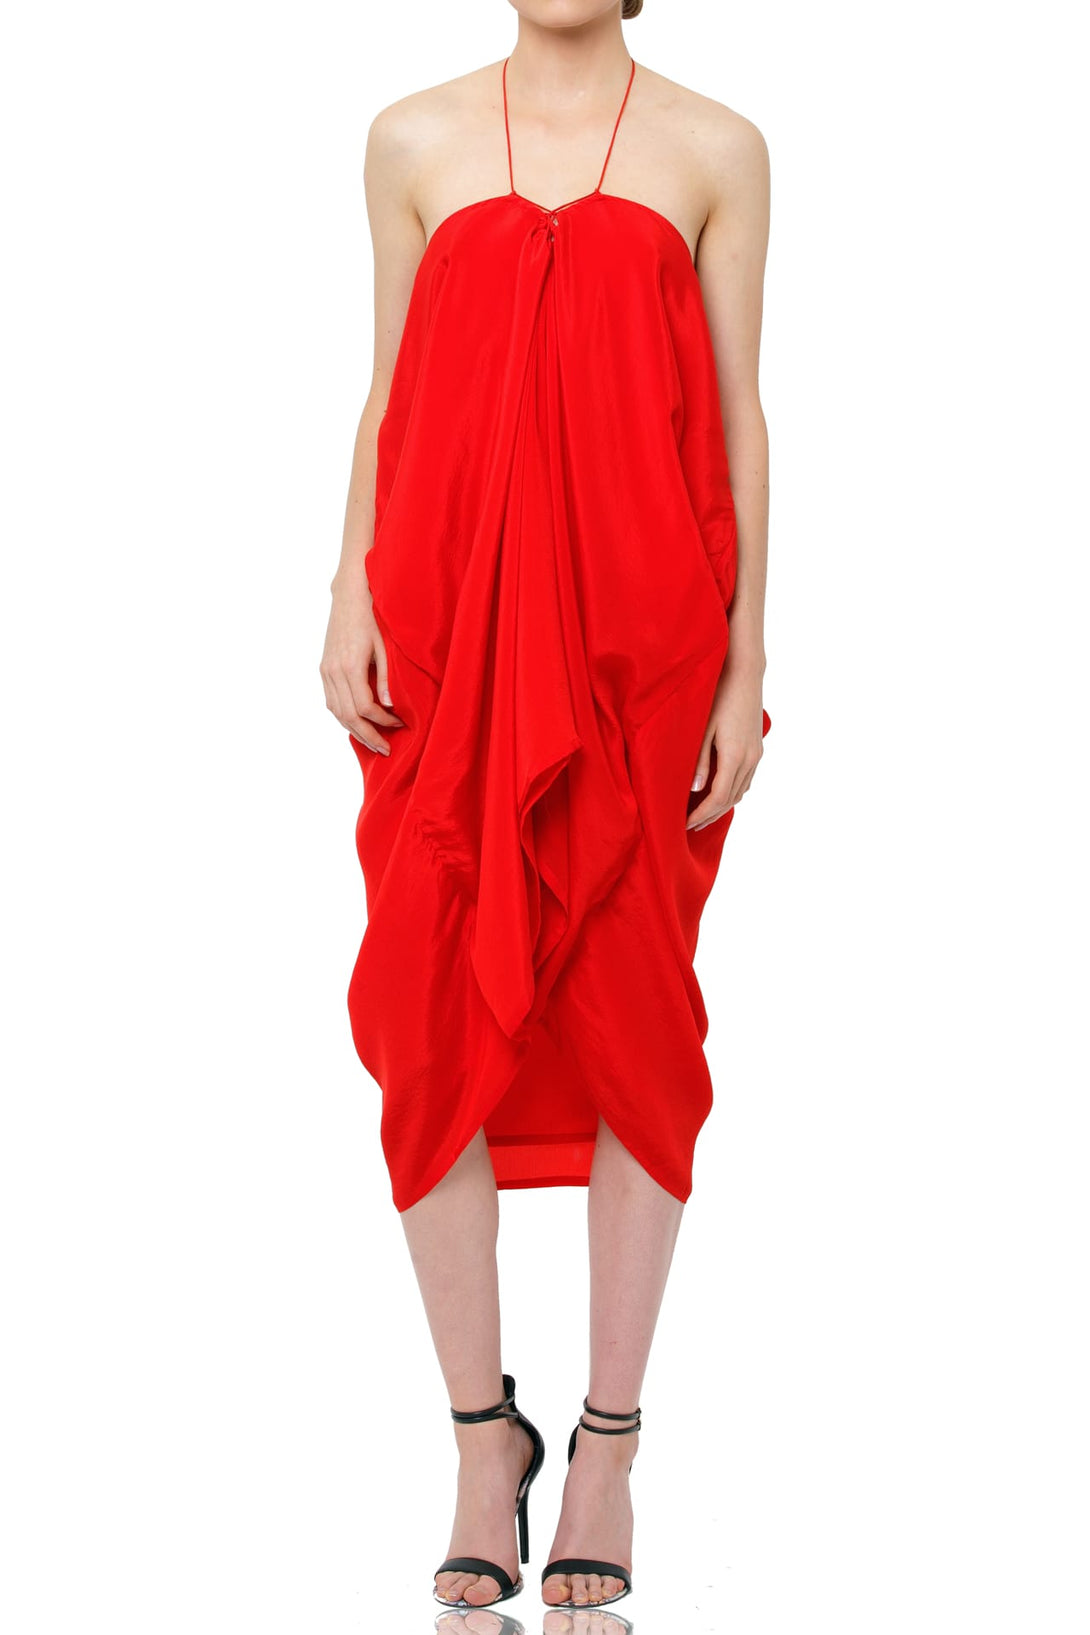  mini red satin dress, Shahida Parides, silk caftans,short sleeveless summer dresses, cute mini dresses,